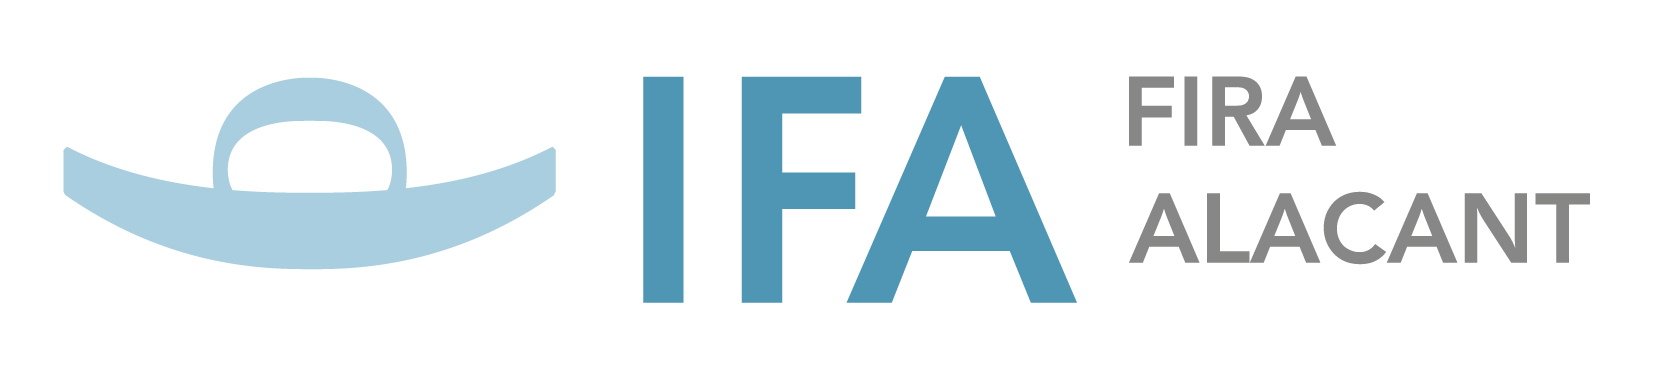 Logo IFA - FIRA ALACANT 